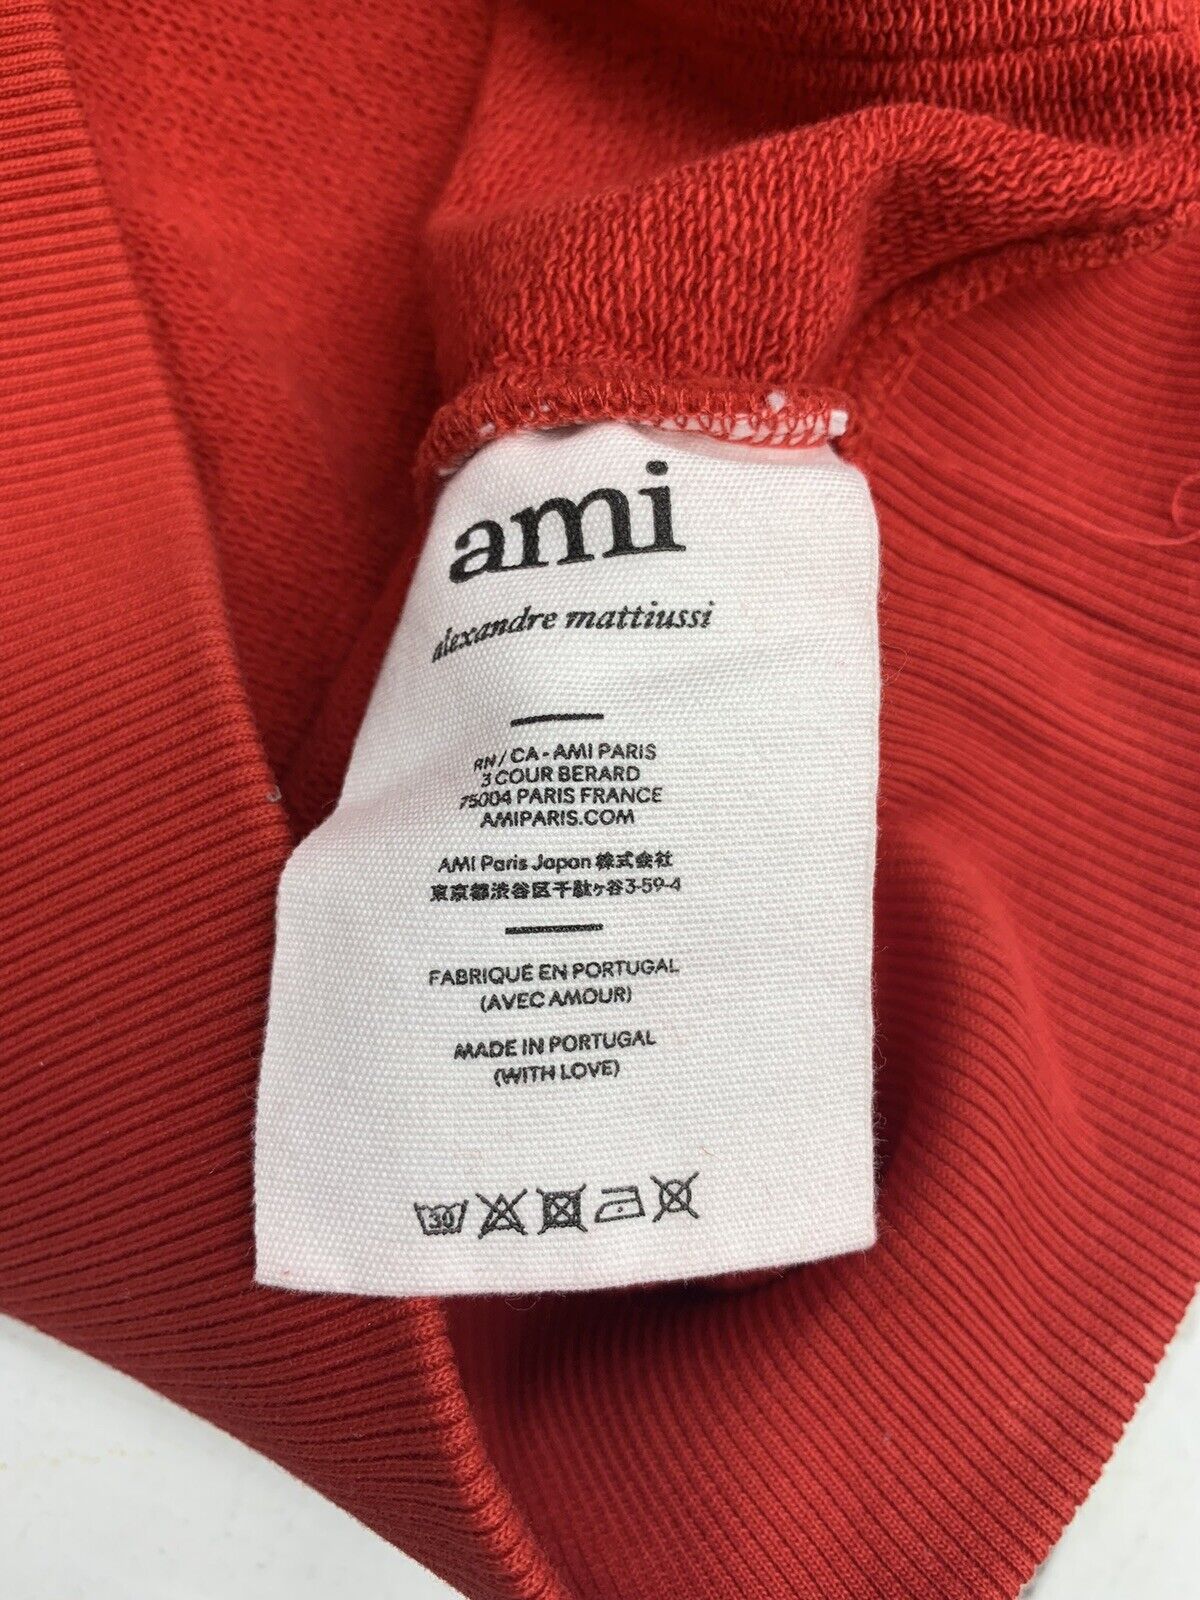 Alexandre Mattiussi Ami Paris De Caur Red Pullover Hoodie Size Medium -  beyond exchange